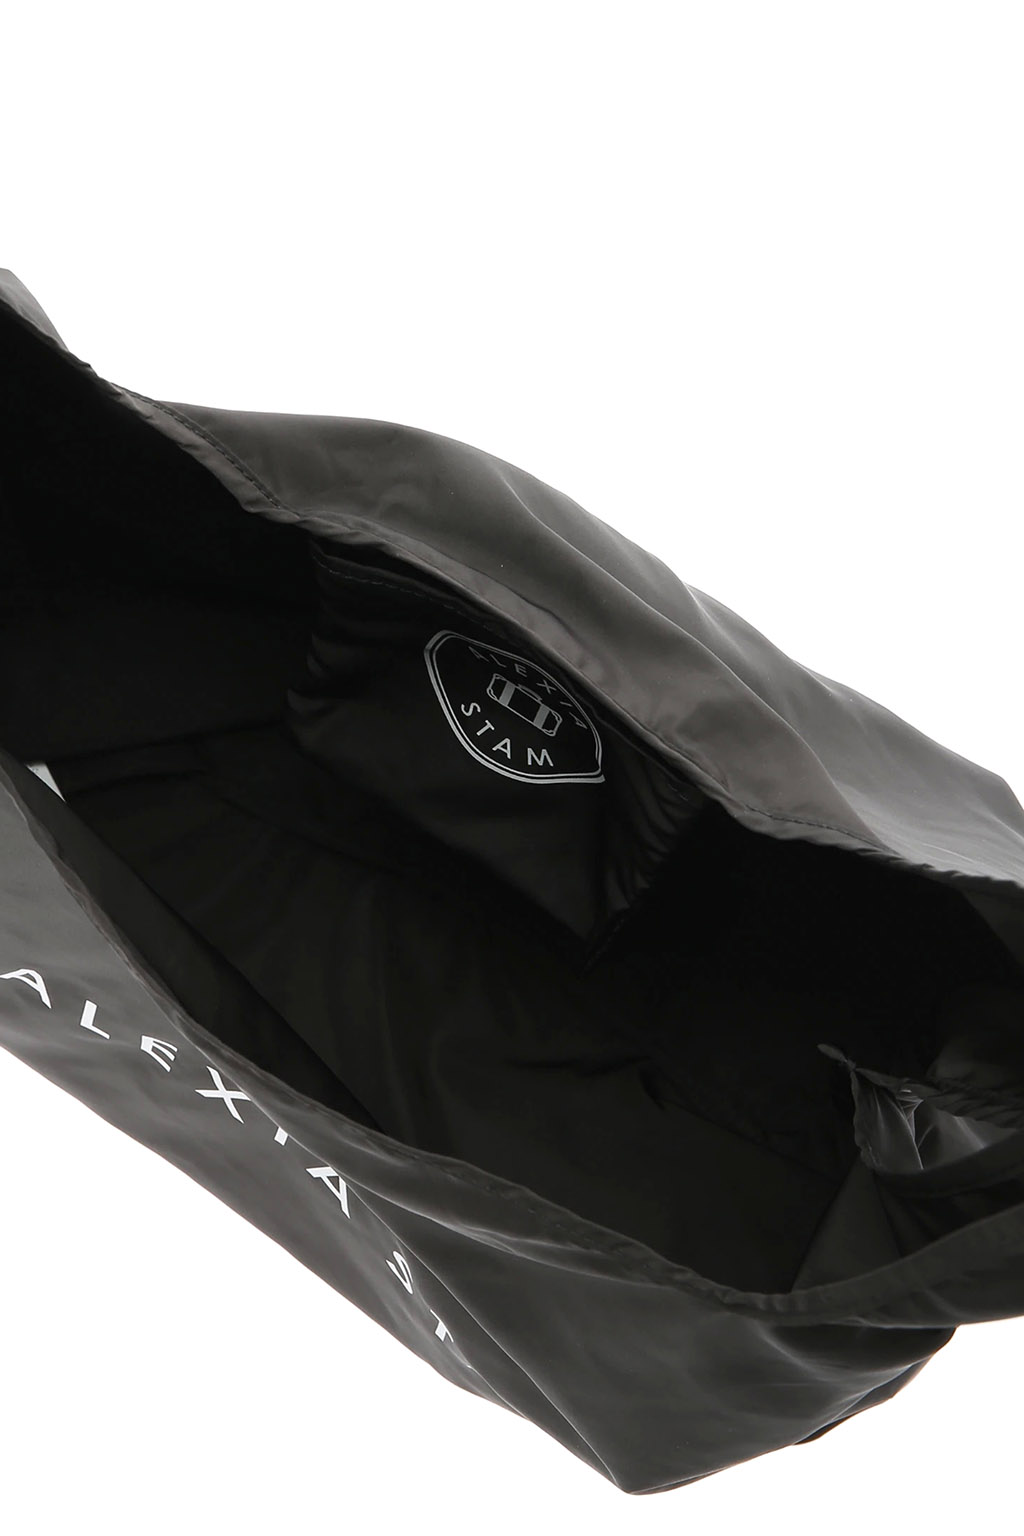 eco-friendly-bag-black-06